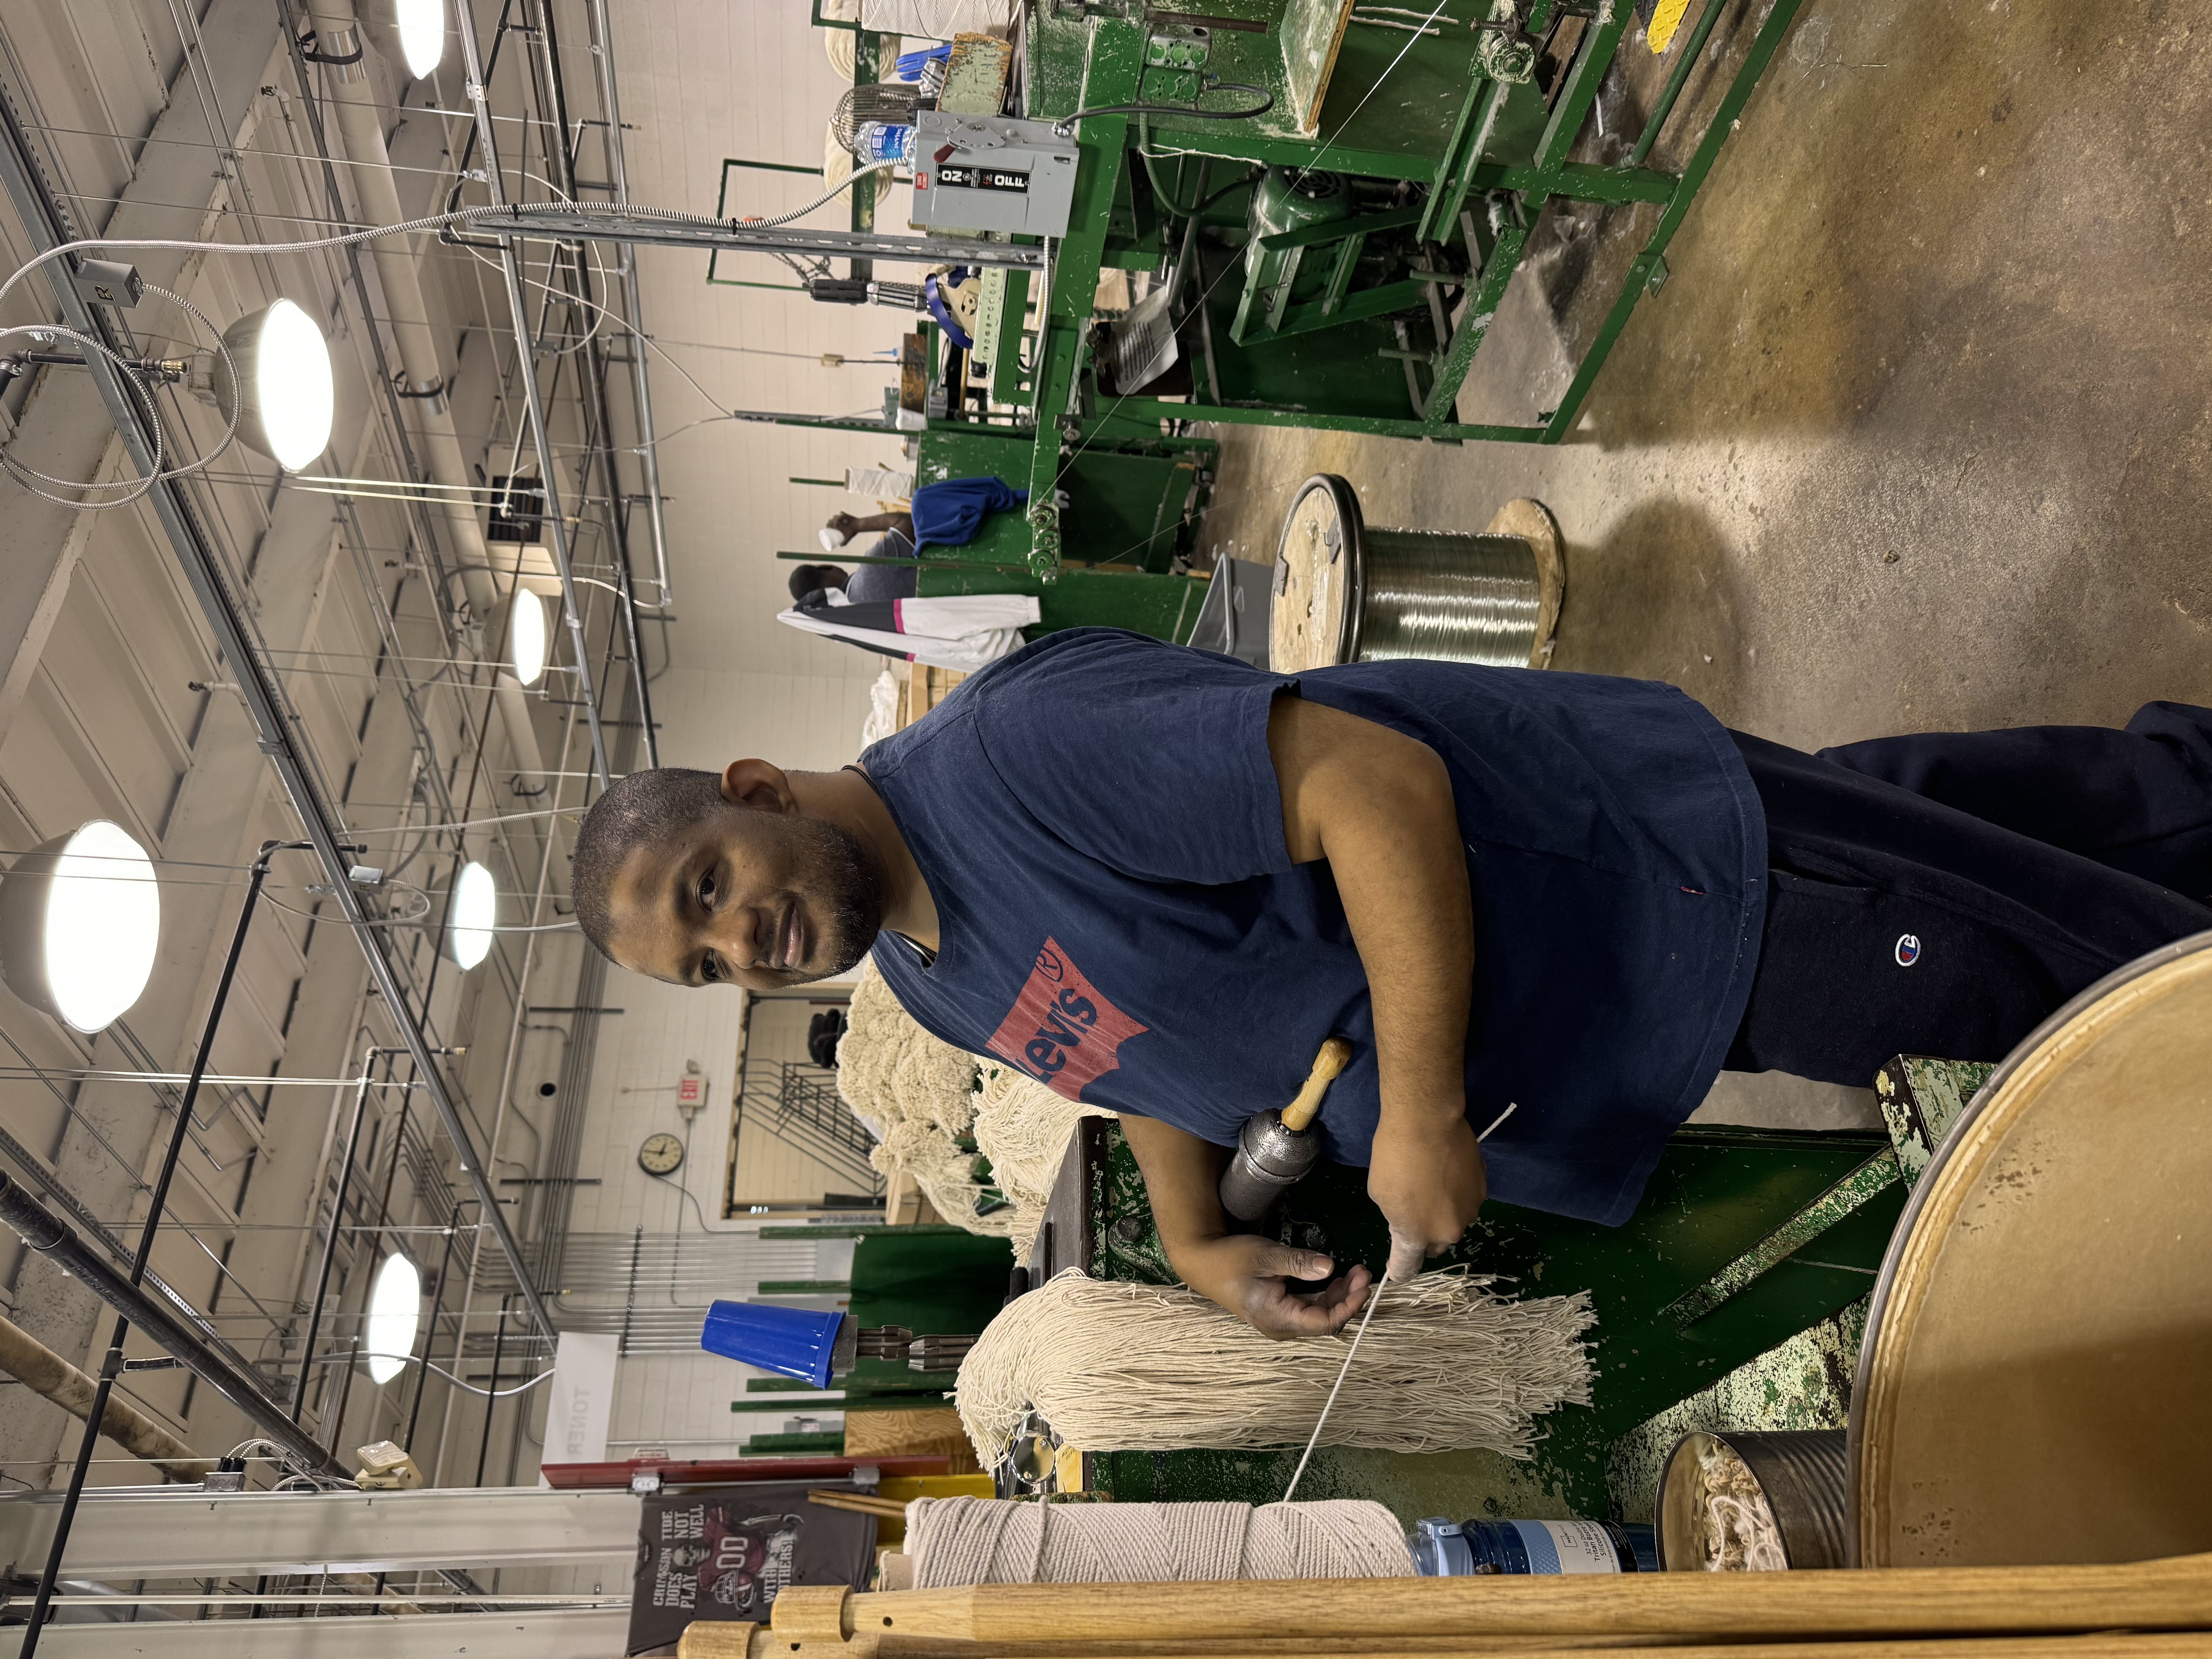 Demetrius Turner works in Mop shop production.